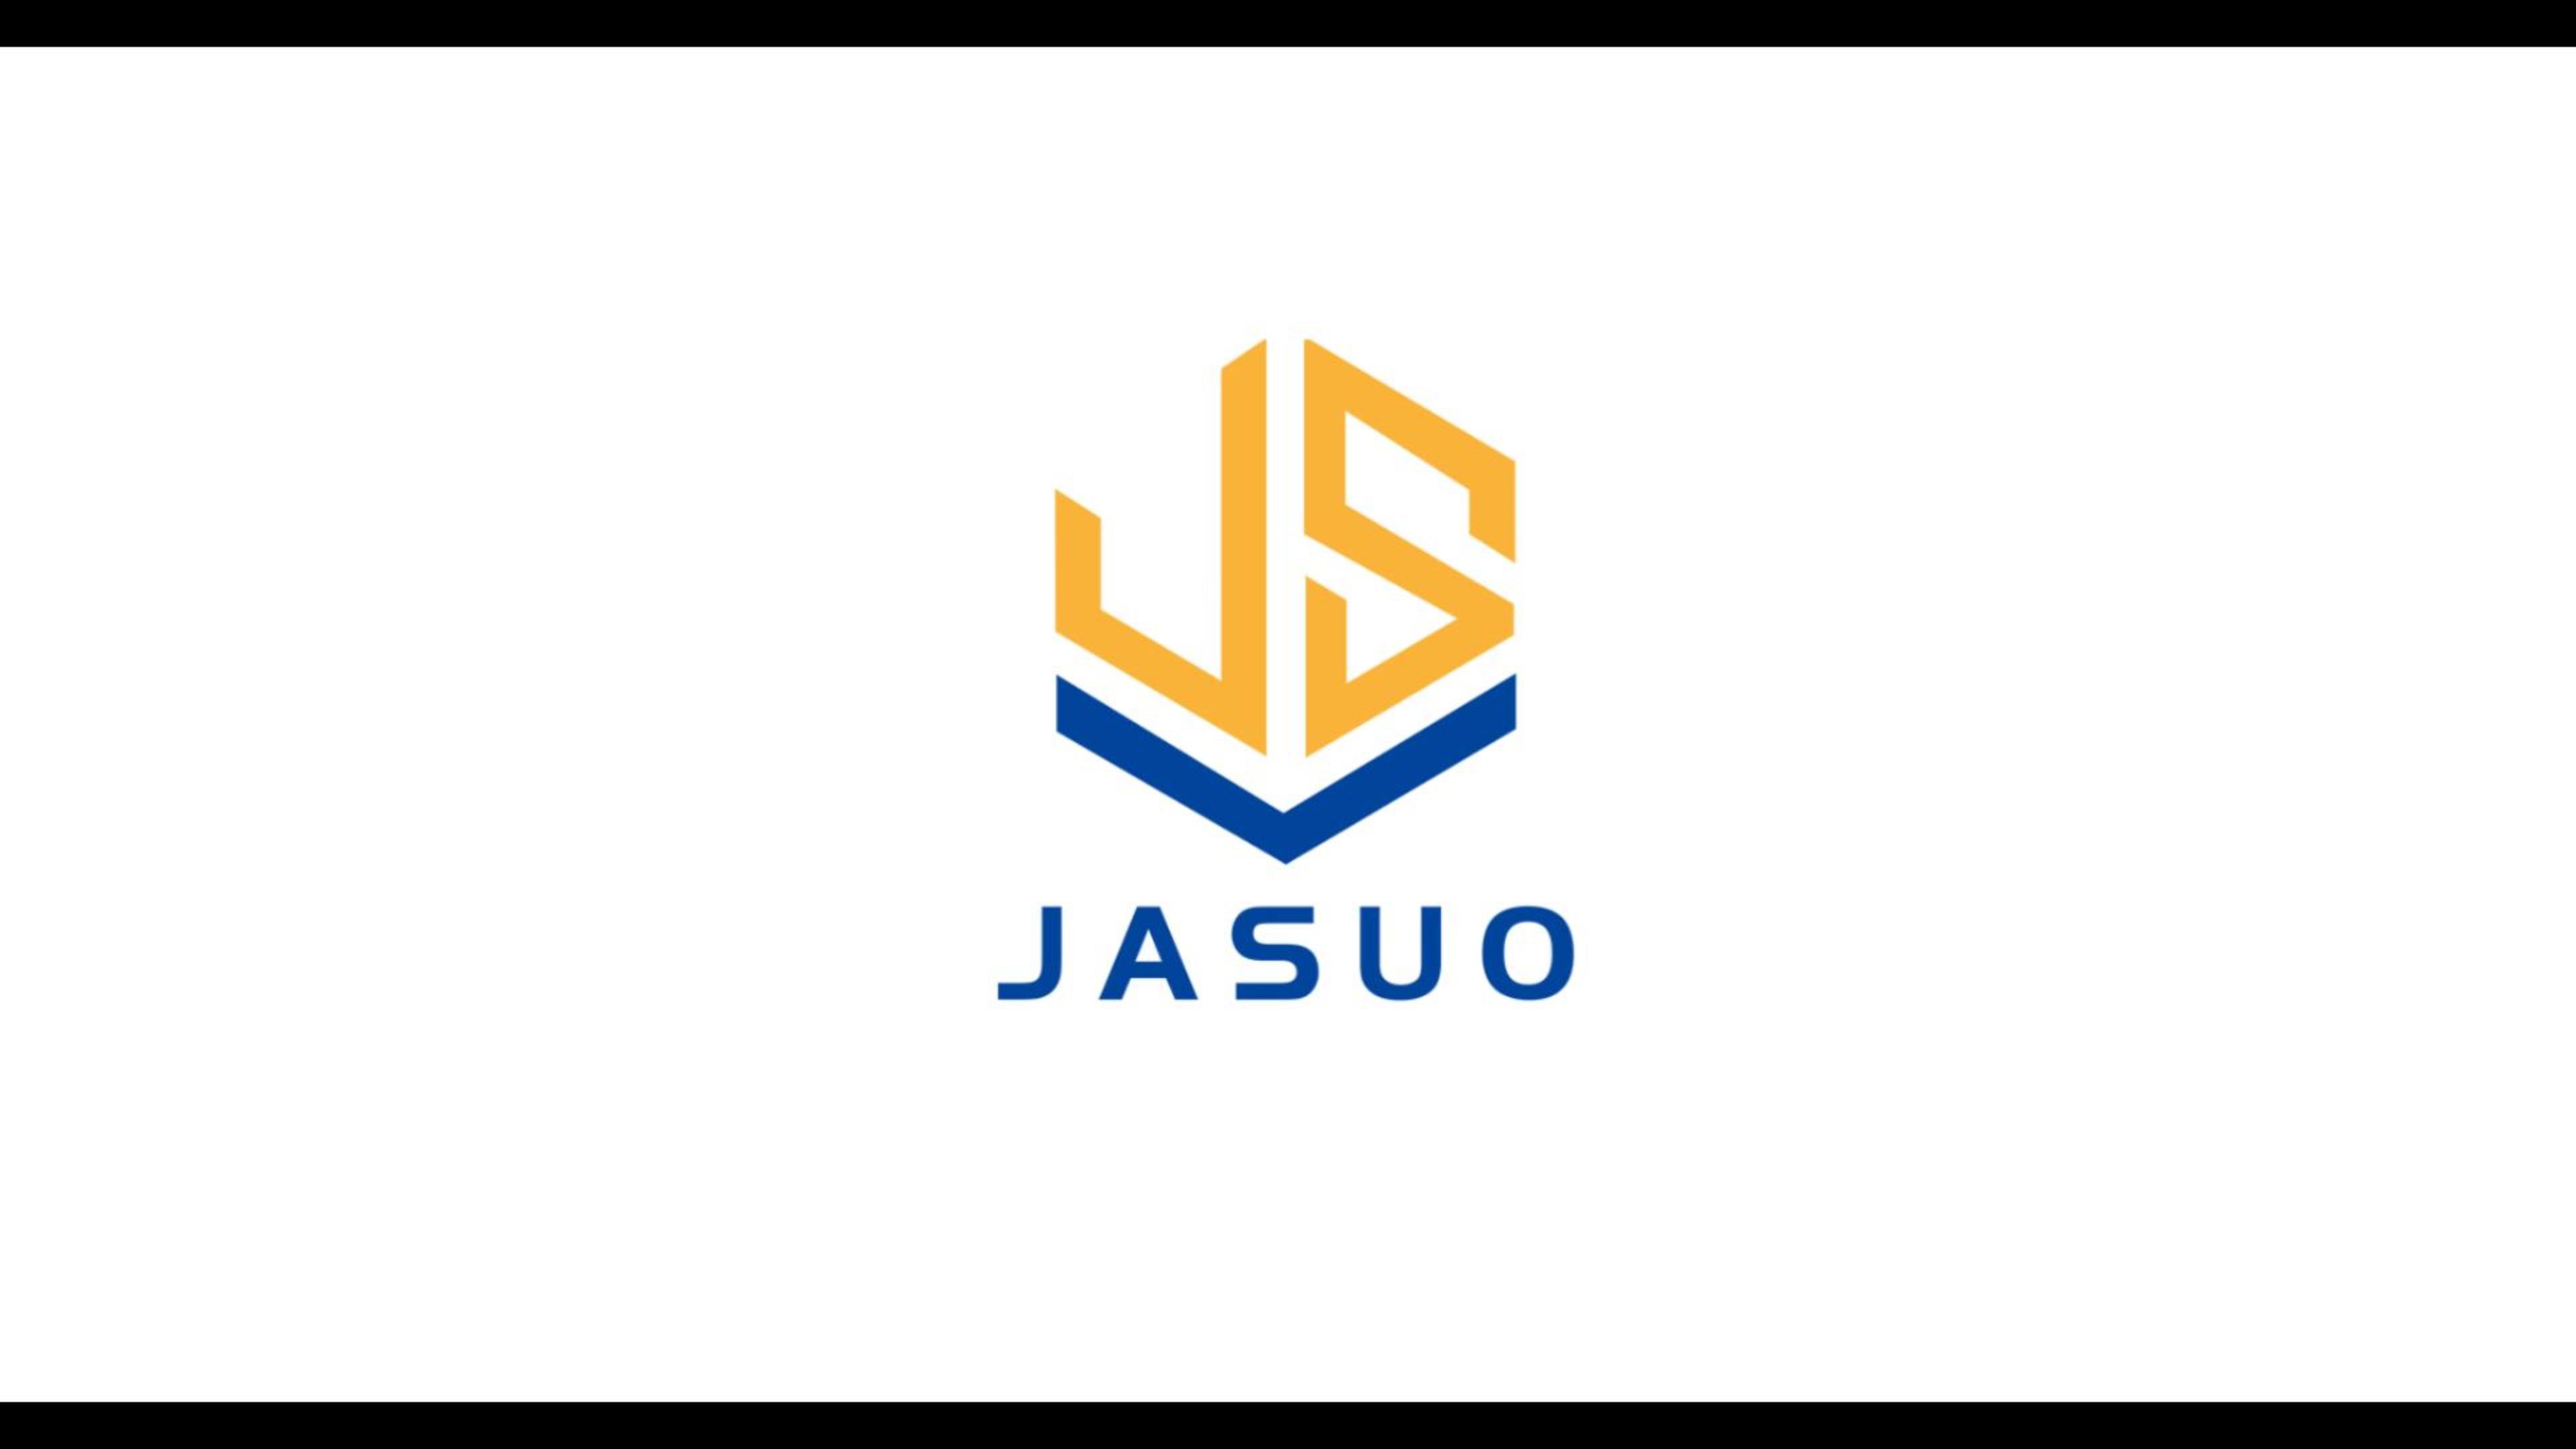 Jasuo dtanl Company video